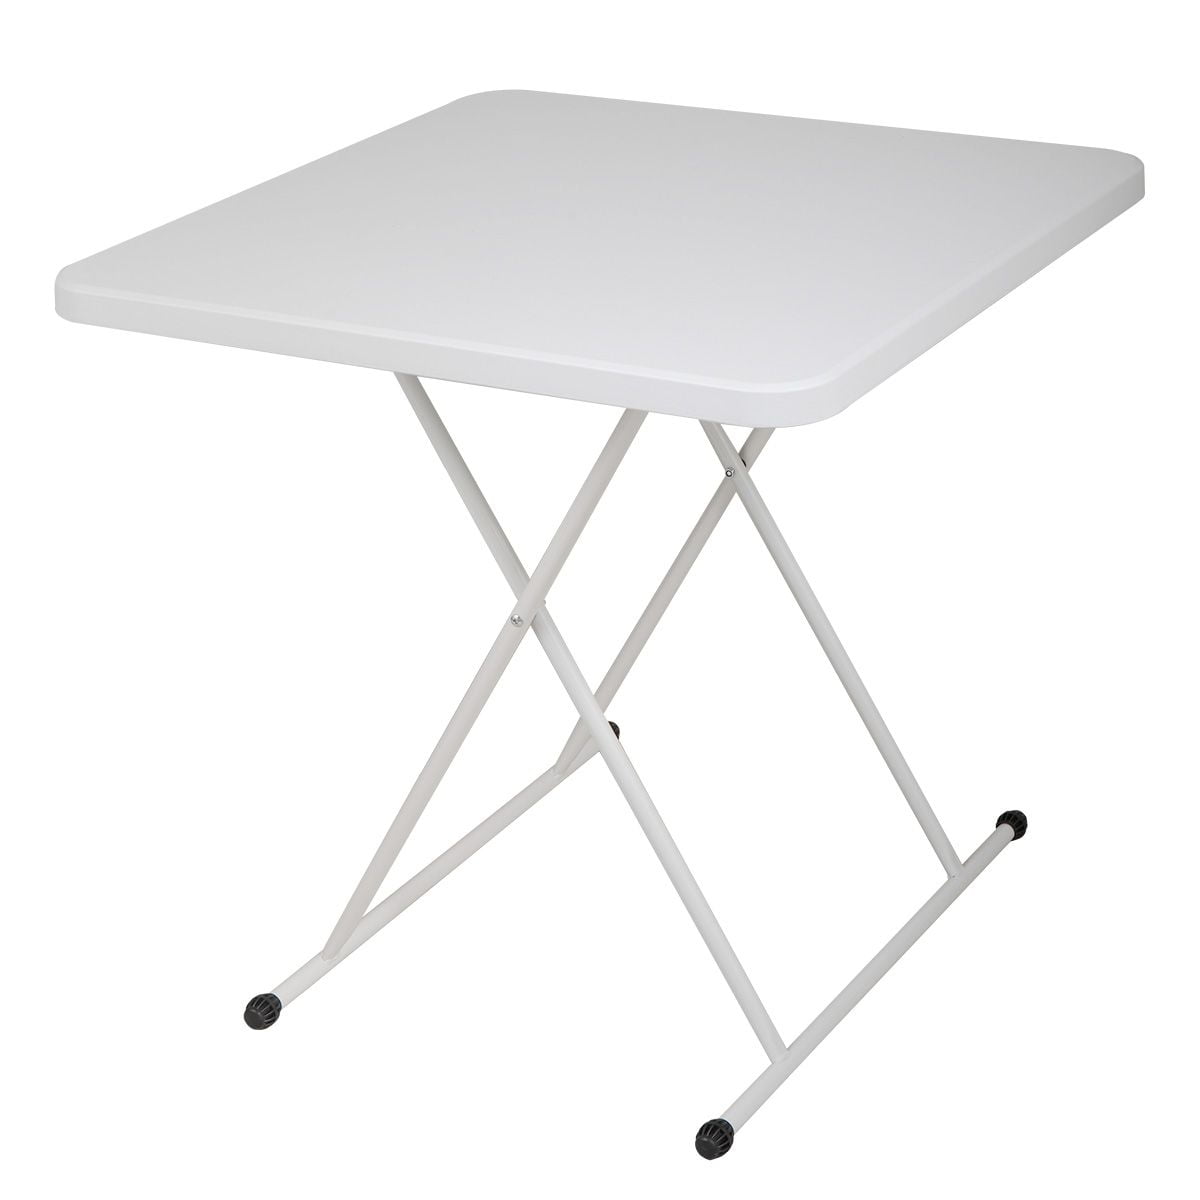 SOUNDANCE Adjustable Folding Table, Lightweight and Portable TV 